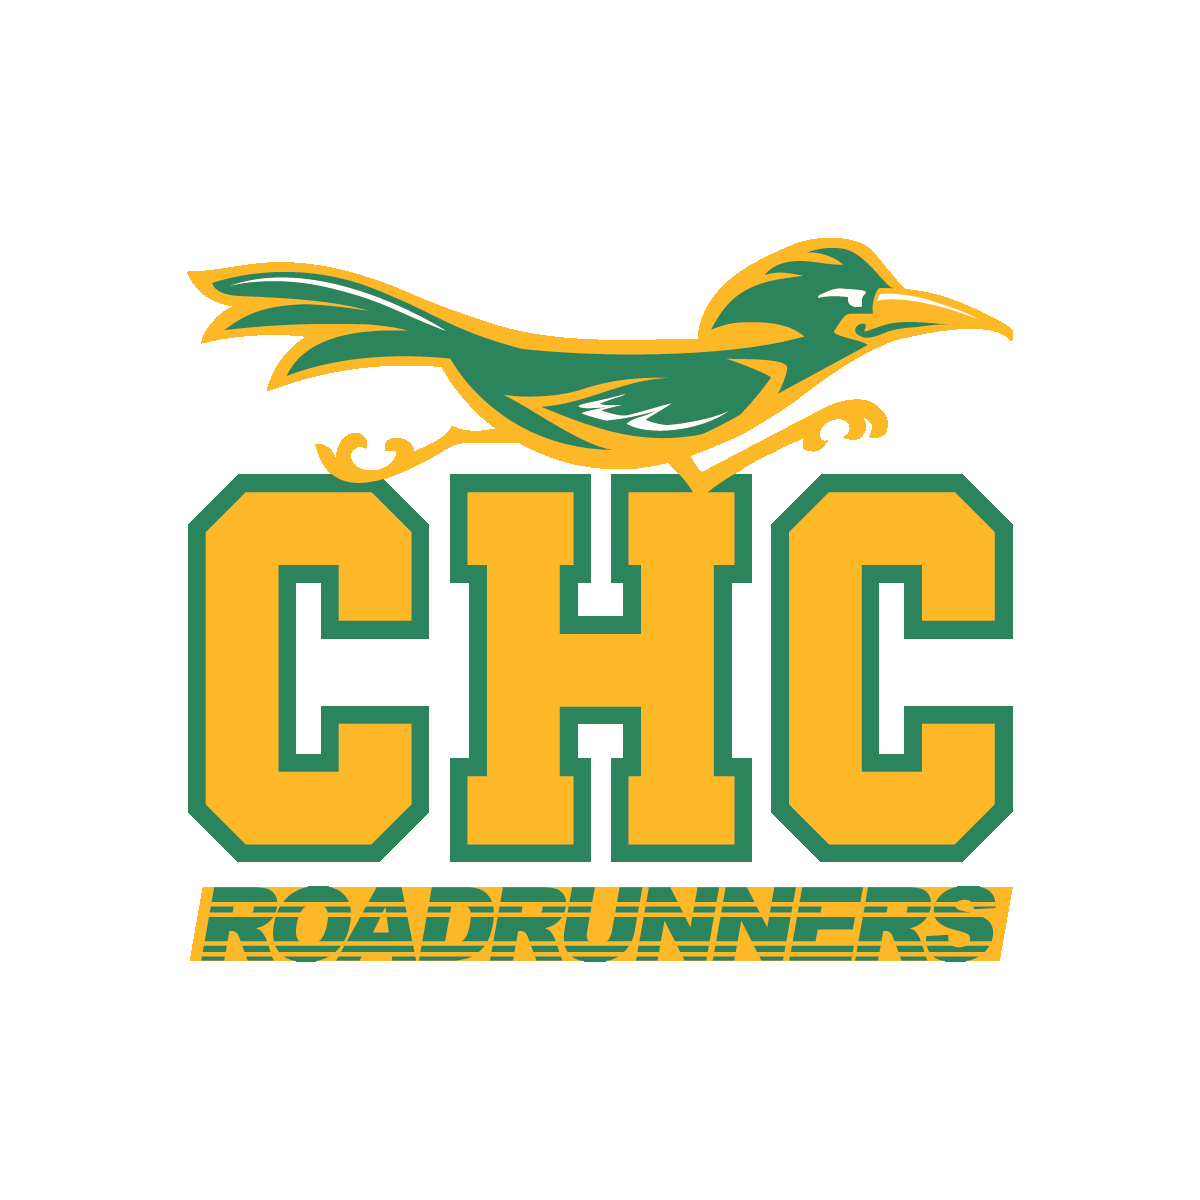 Athletics mascot CHC Roadrunners - color